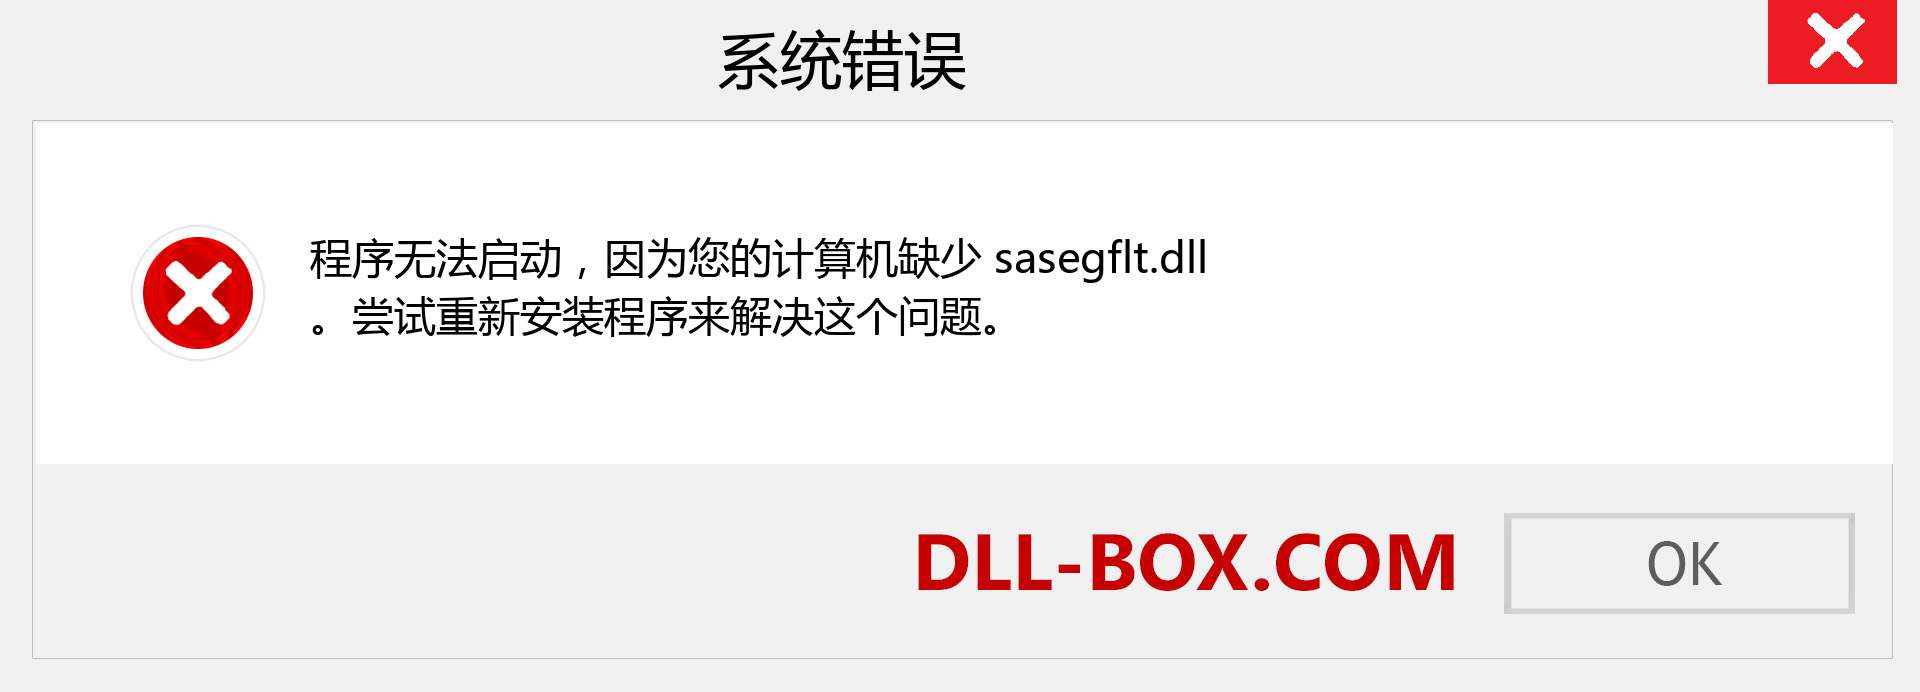 sasegflt.dll 文件丢失？。 适用于 Windows 7、8、10 的下载 - 修复 Windows、照片、图像上的 sasegflt dll 丢失错误